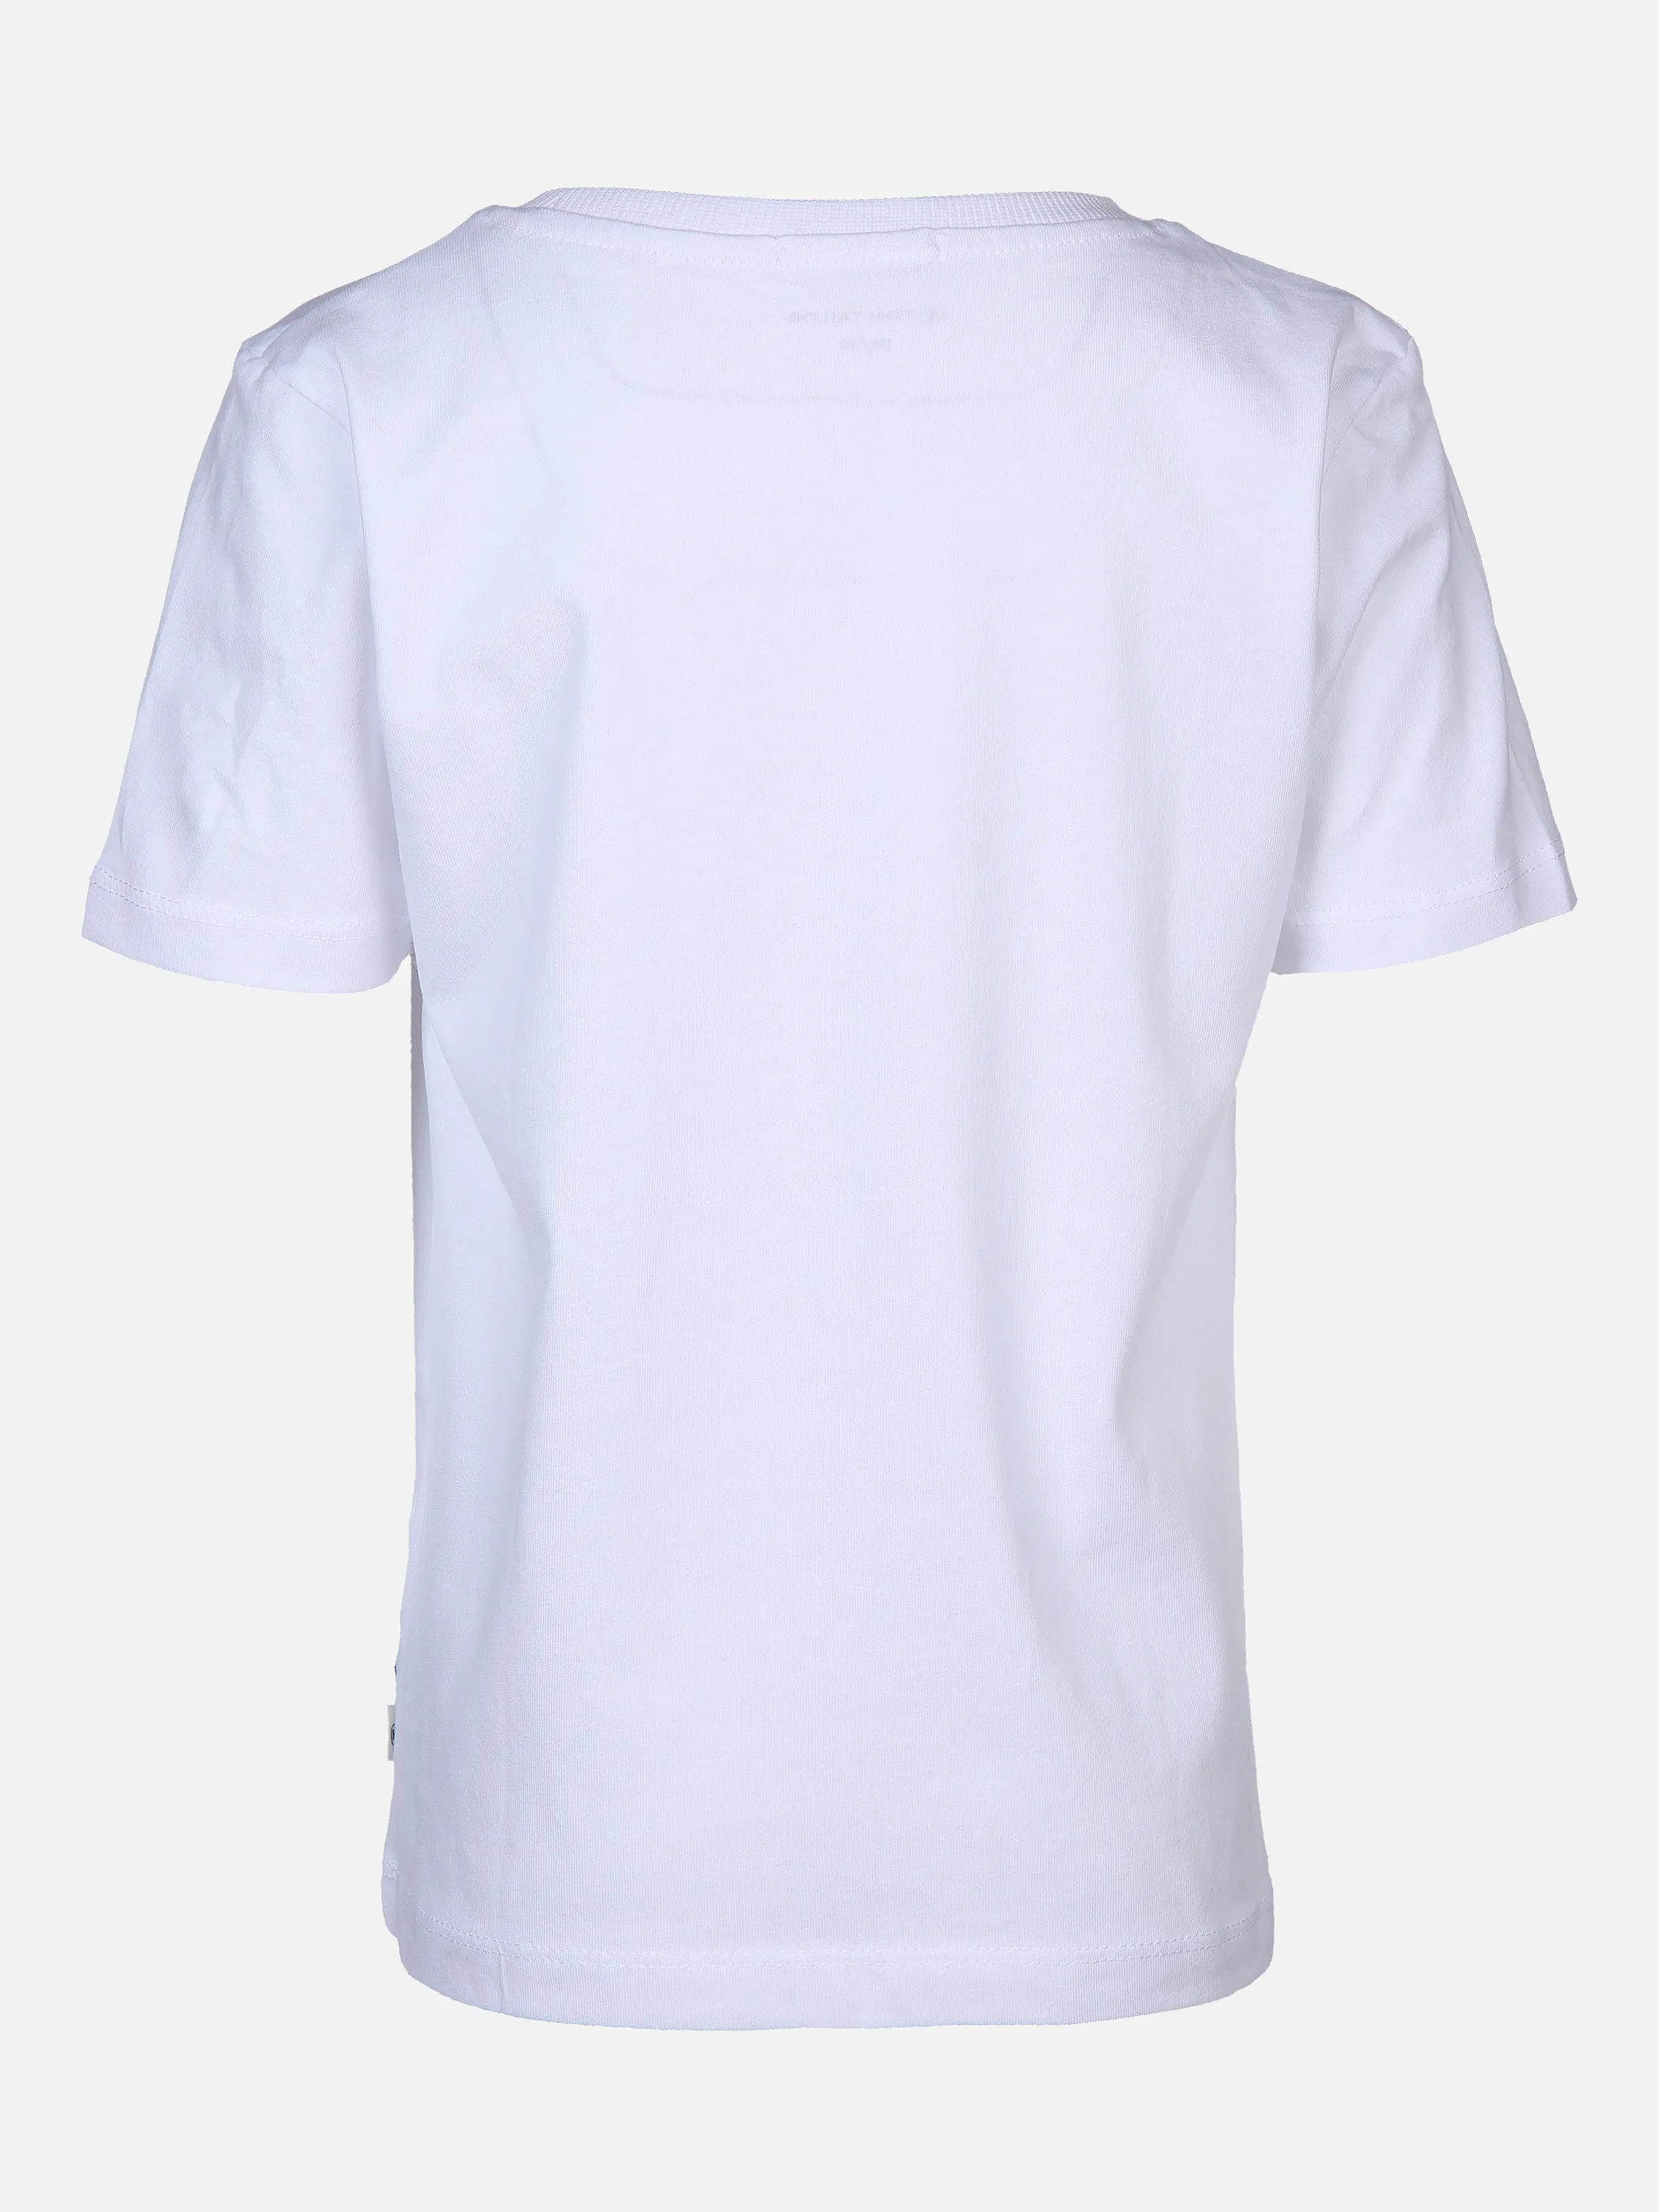 Tom Tailor 1030573 printed t-shirt Weiß 860533 20000 2